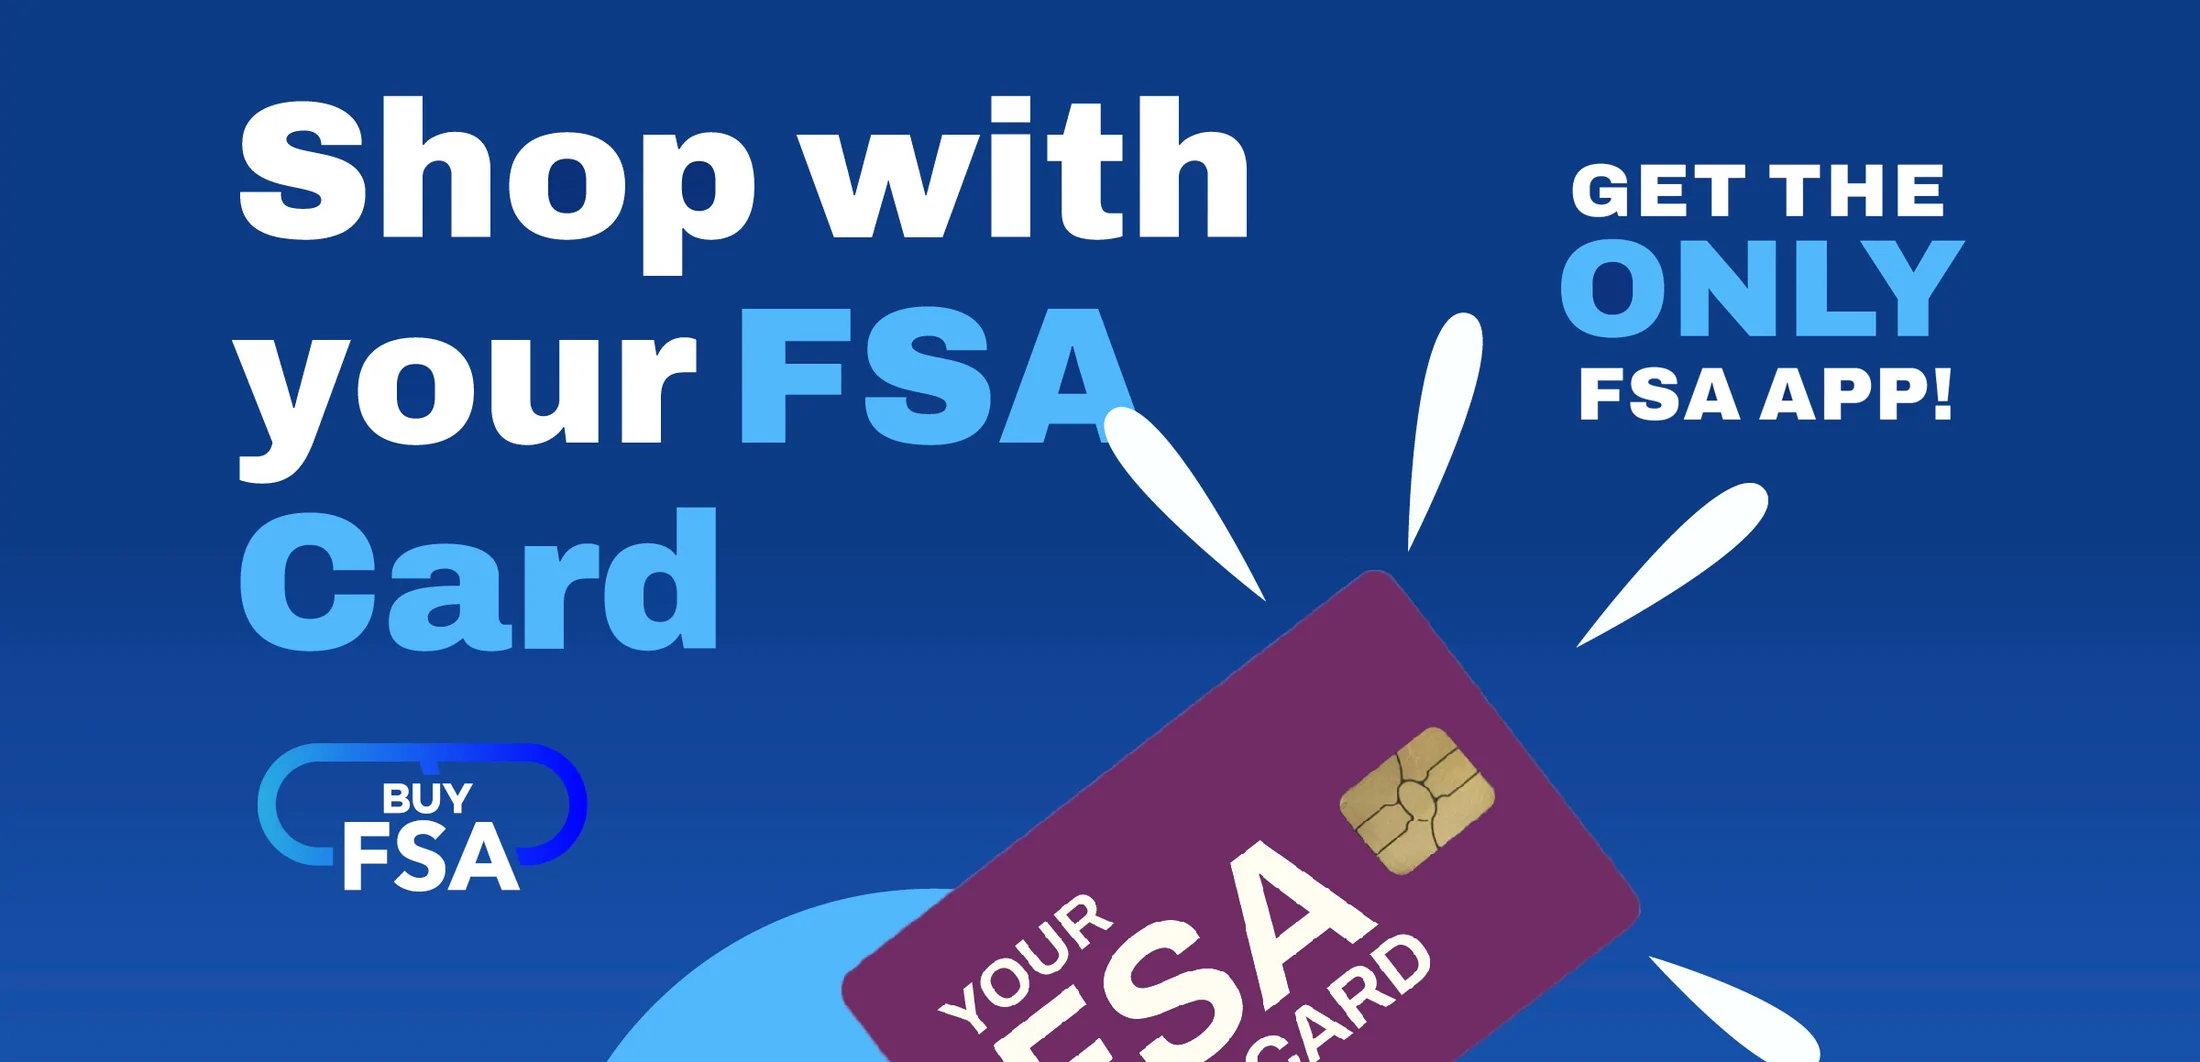 Shopping Kim: Where Can I Use My FSA Card Online?